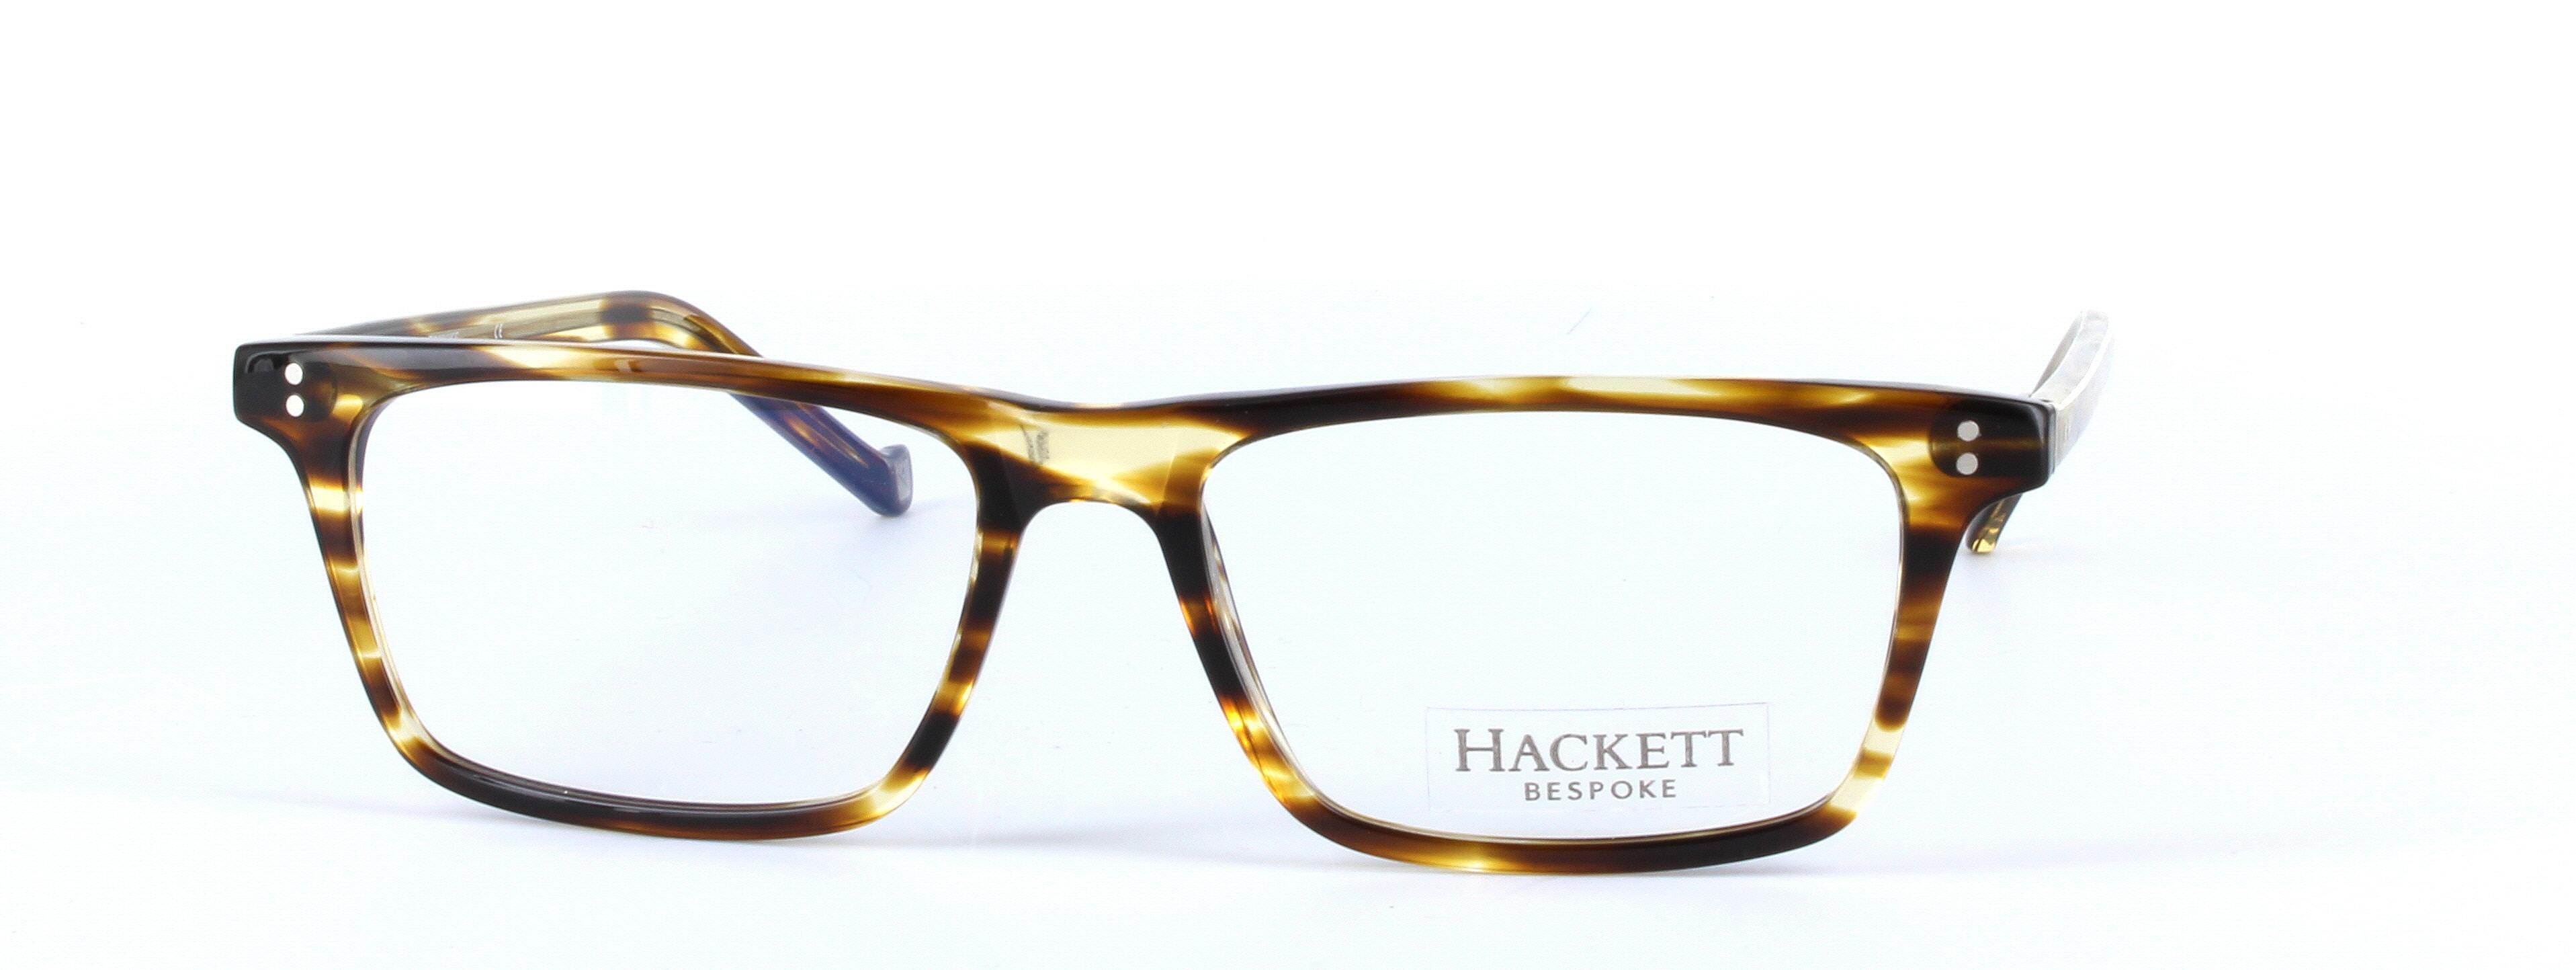 HACKETT BESPOKE (HEB142-192) Brown Full Rim Oval Rectangular Acetate Glasses - Image View 5